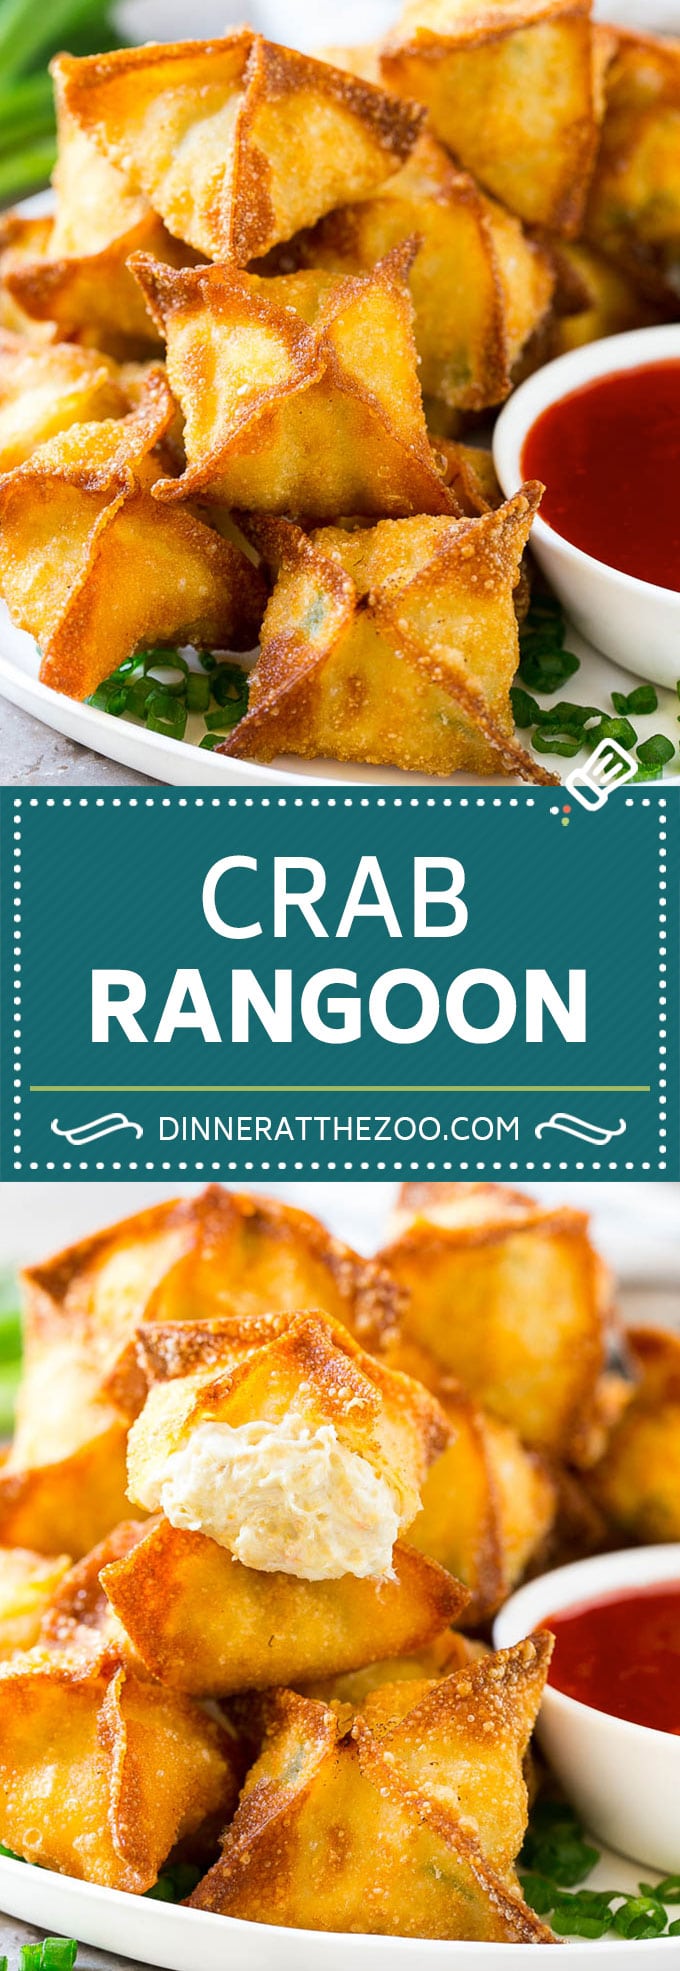 Crab Rangoon Recipe | Crab Wontons | Cream Cheese Wontons #crab #cheese #appetizer #snack #chinesefood #dinner #dinneratthezoo